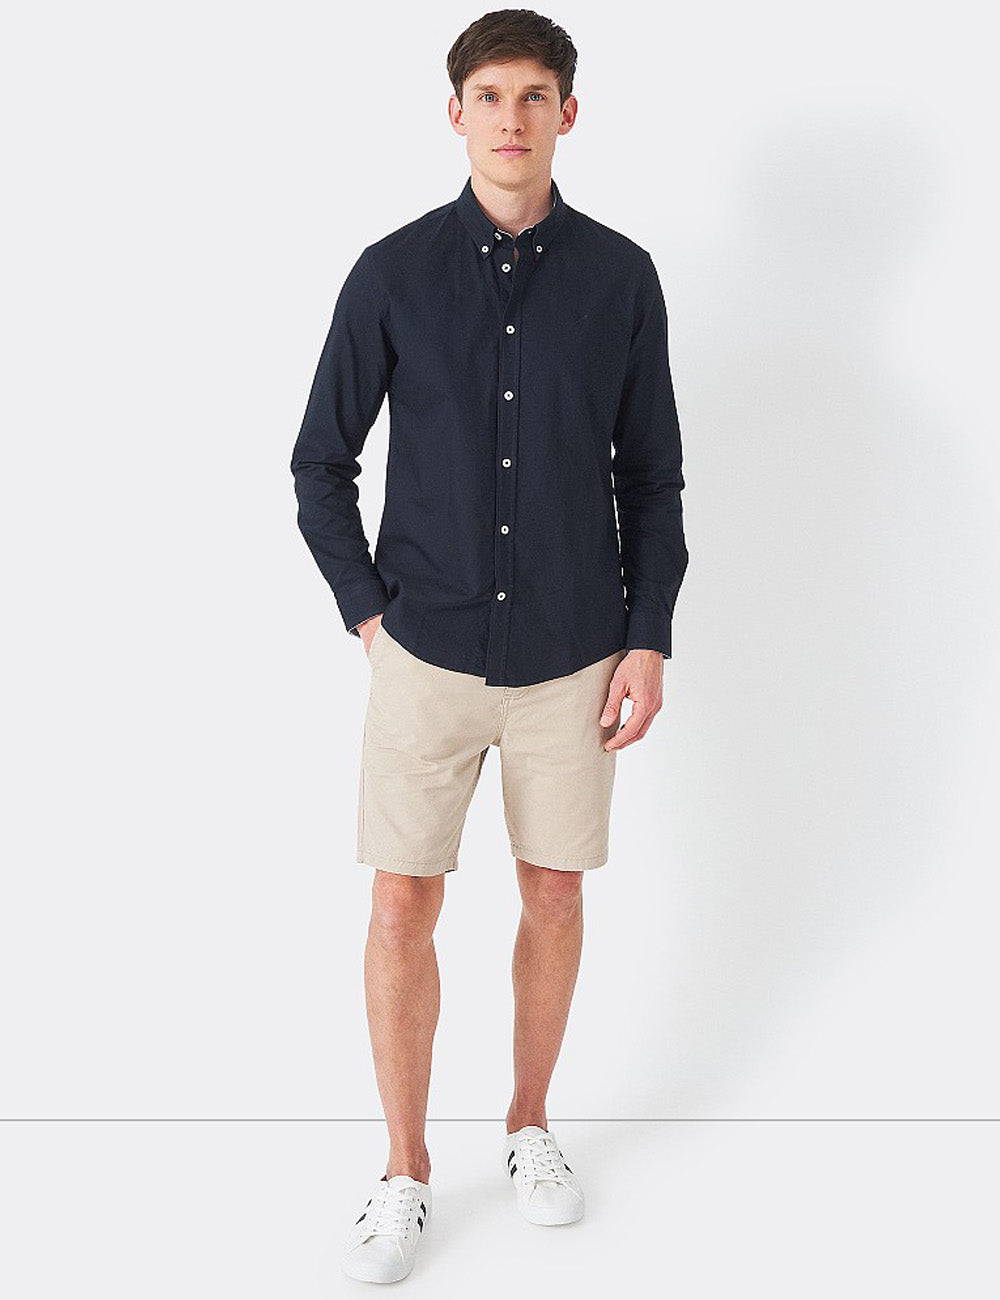 Crew Clothing Oxford Slim Fit Shirt - Navy